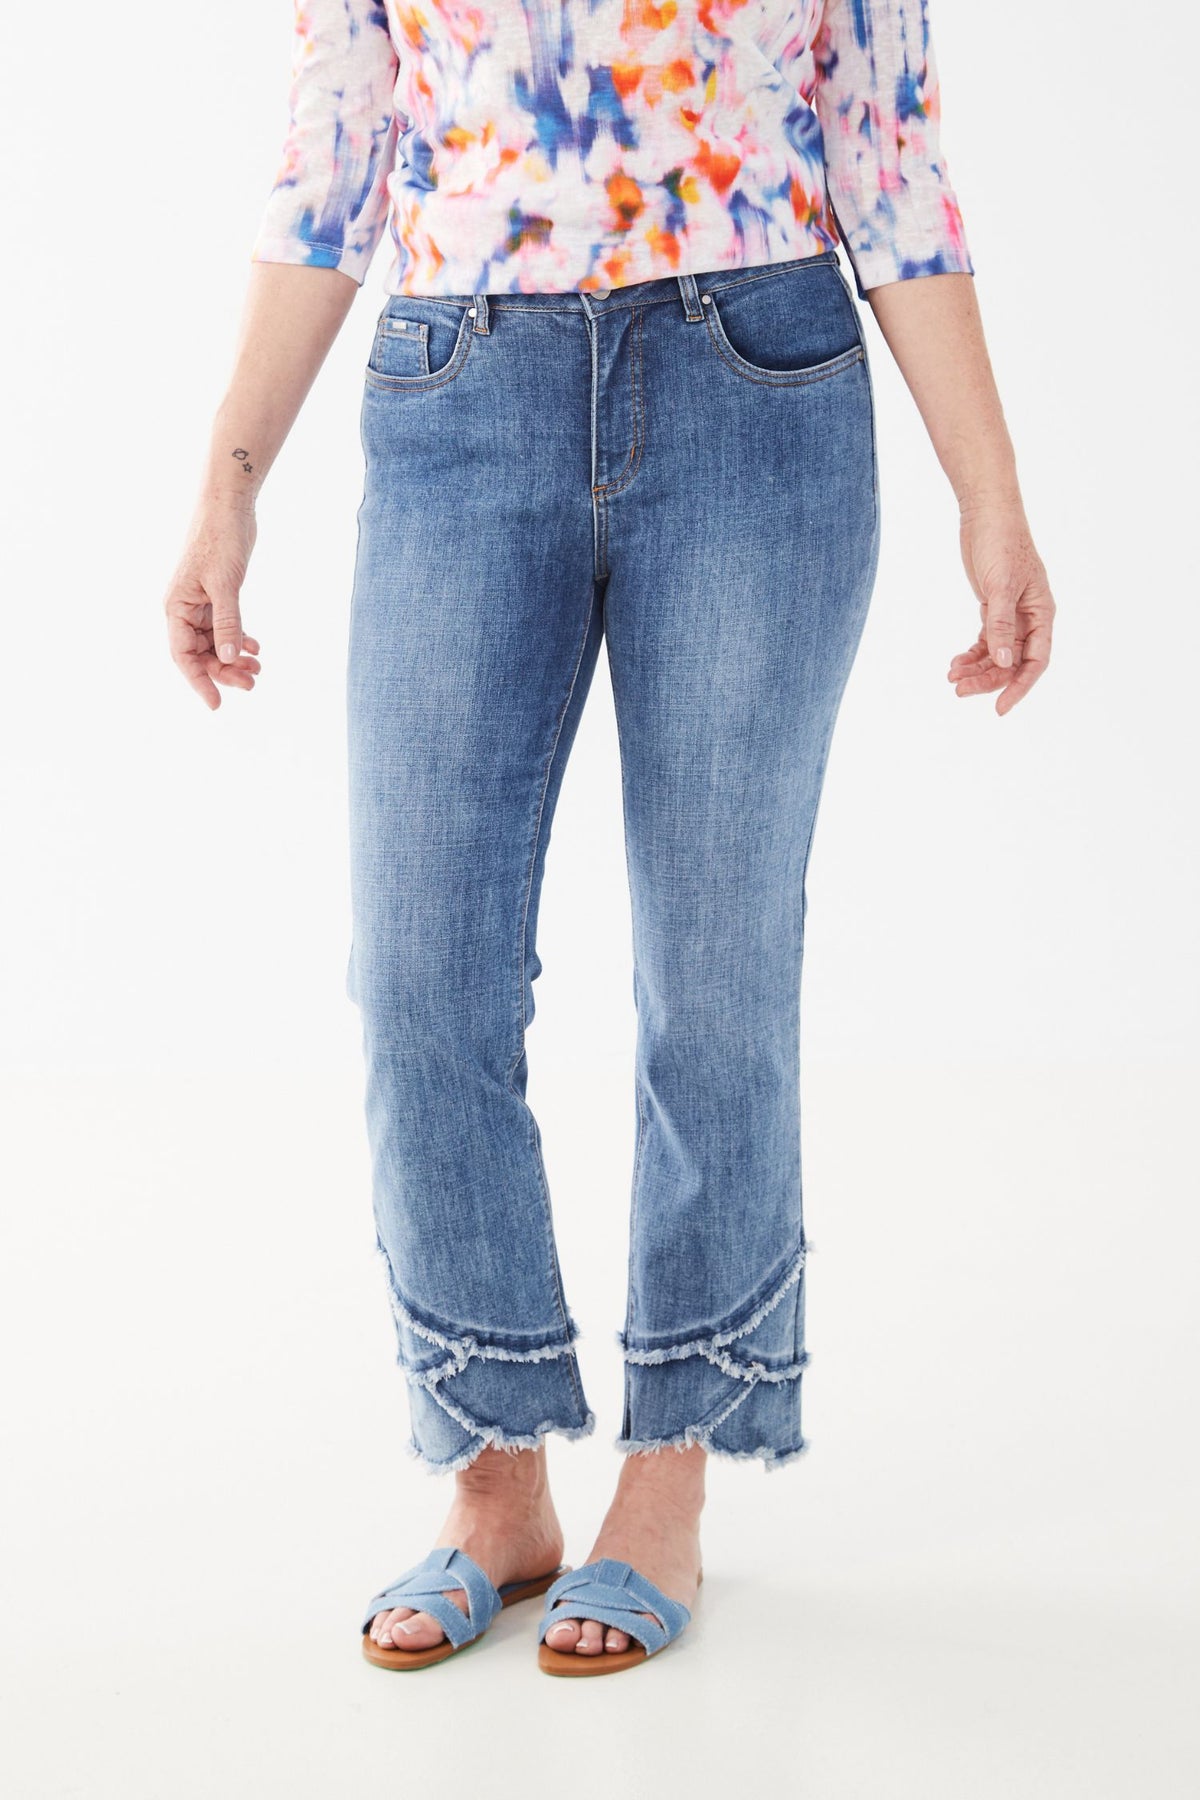 FDJ Olivia Tulip Hem Straight Ankle Jeans - Style 2502809, front